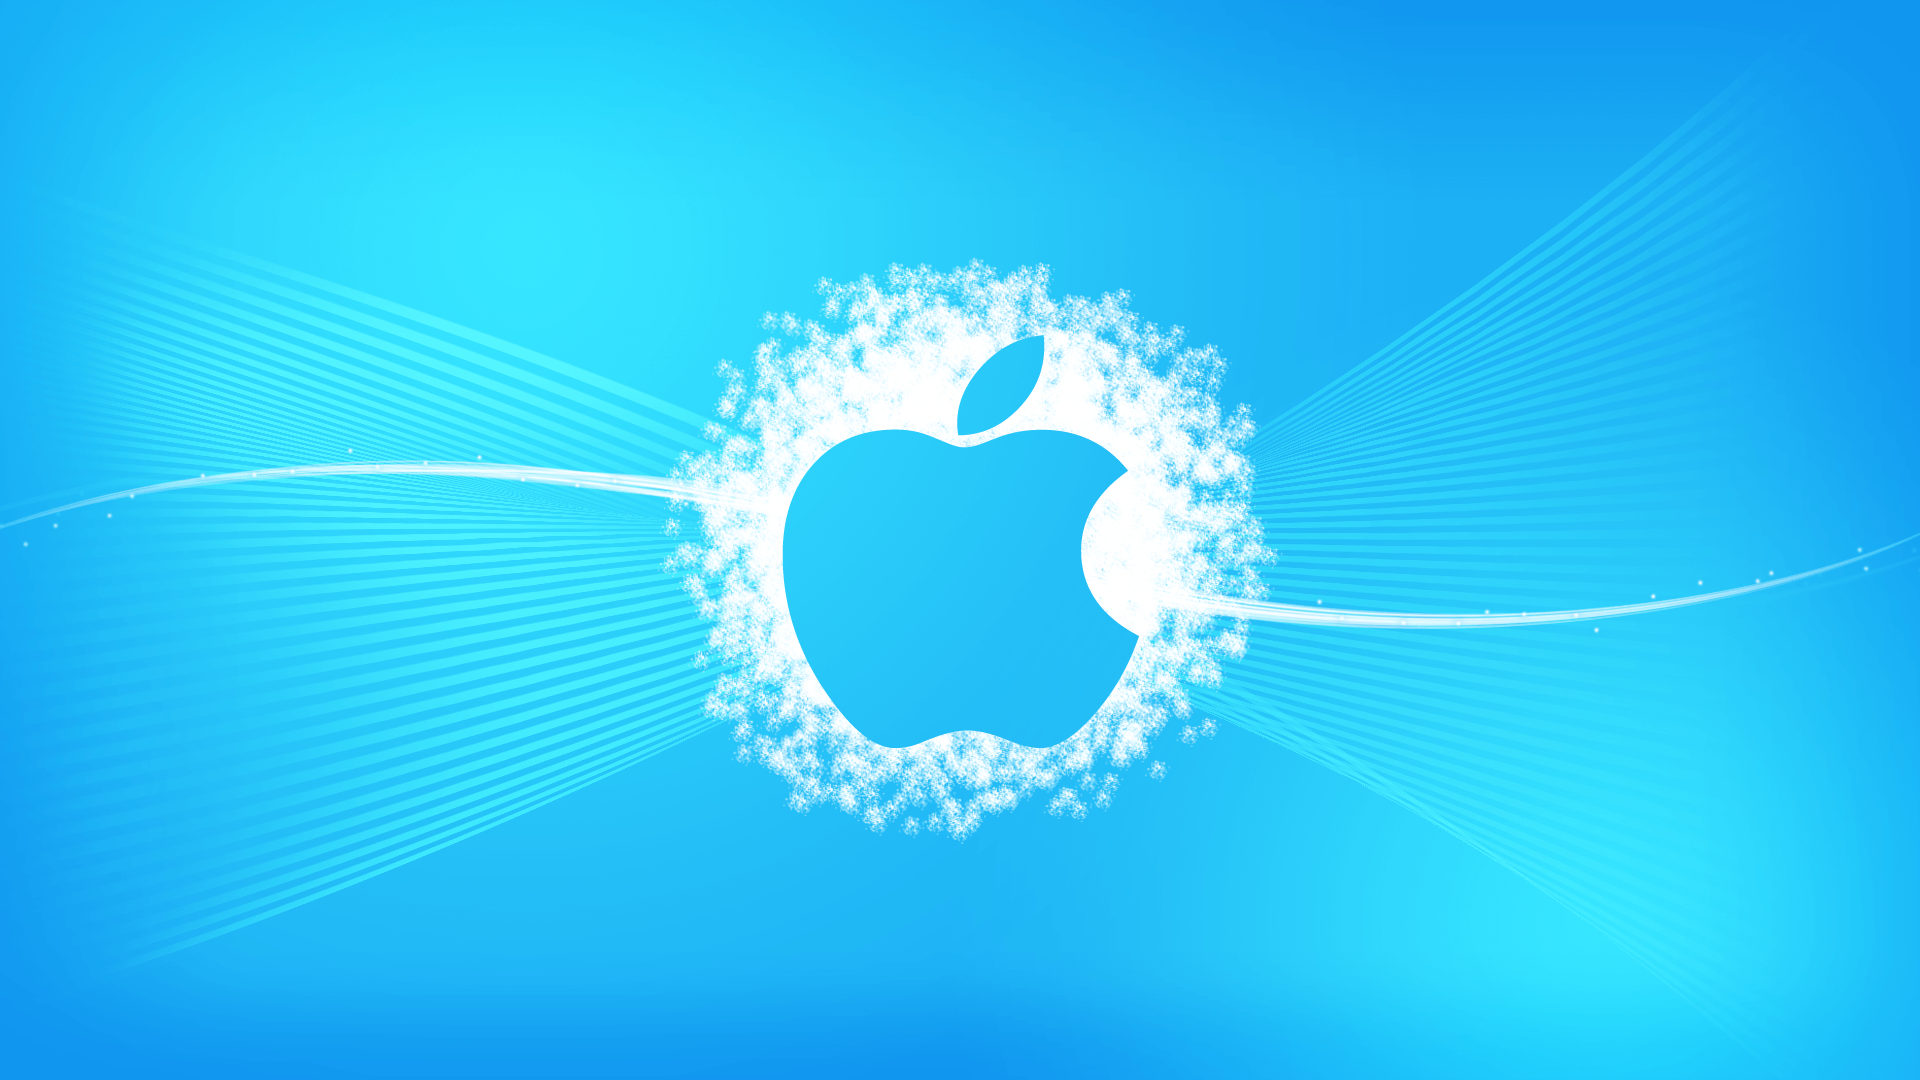 White and Blue Apple Logo - Blue Apple Wallpapers HD | PixelsTalk.Net